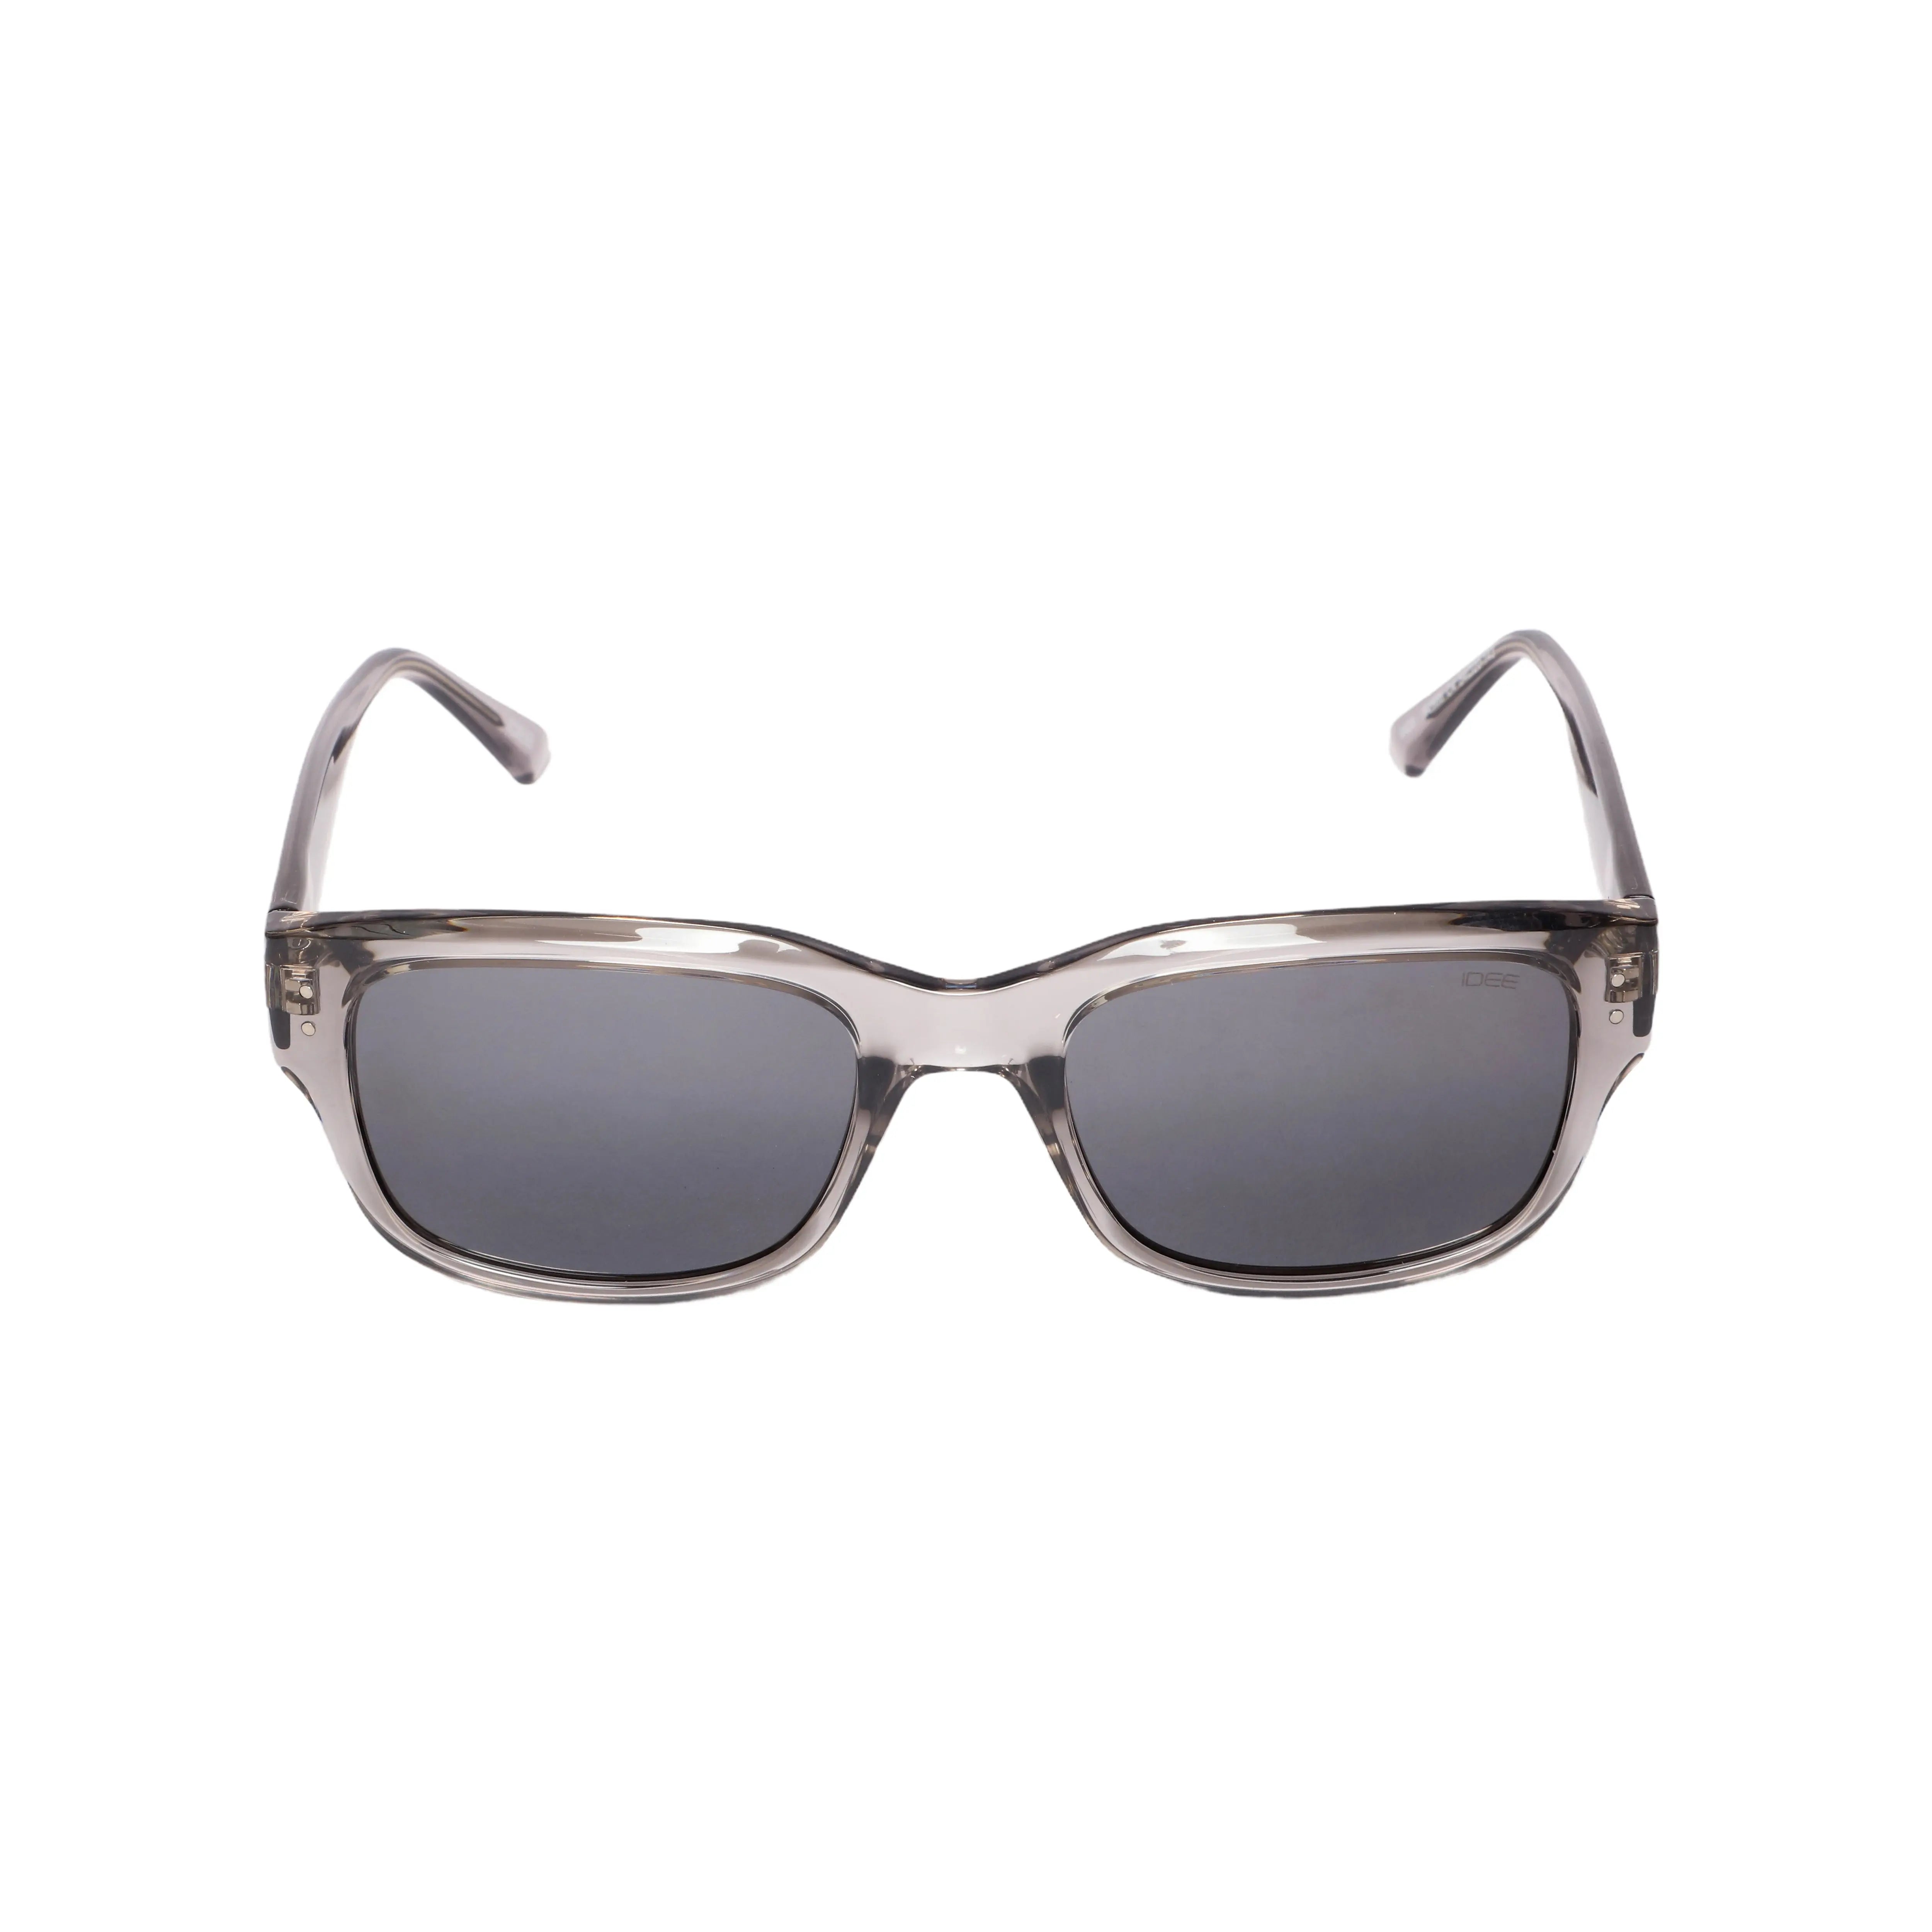 IDEE-S2988--C4 Sunglasses - Premium Sunglasses from IDEE - Just Rs. 3110! Shop now at Laxmi Opticians